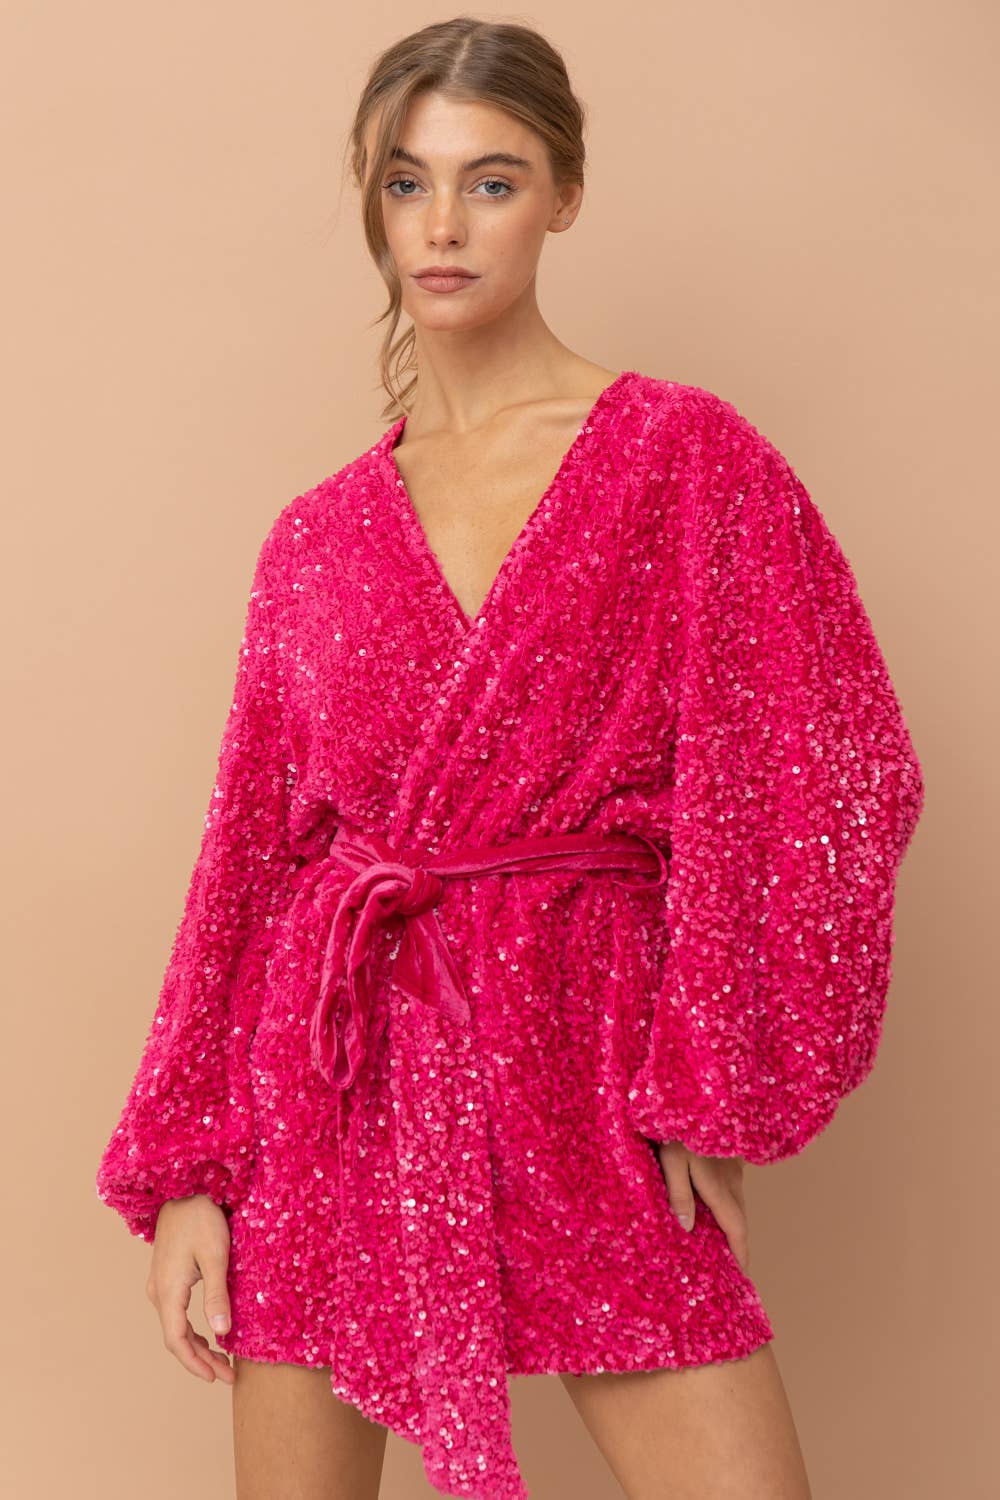 Hot pink sequin wrap dress